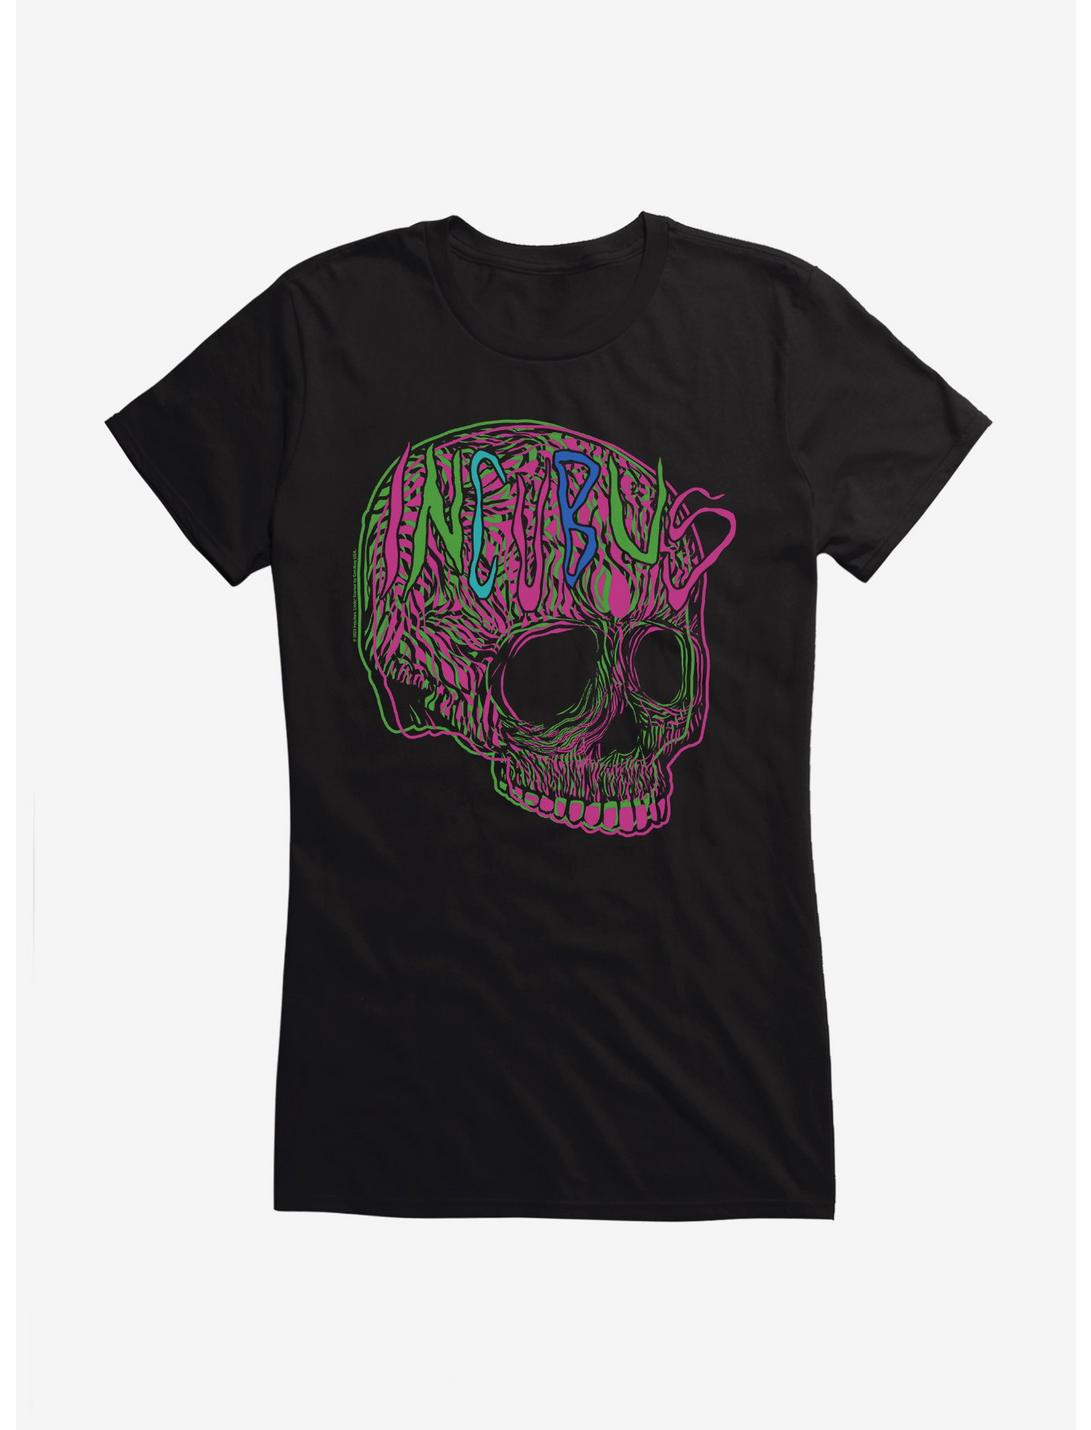 Incubus Neon Skull Girls T-Shirt, BLACK, hi-res